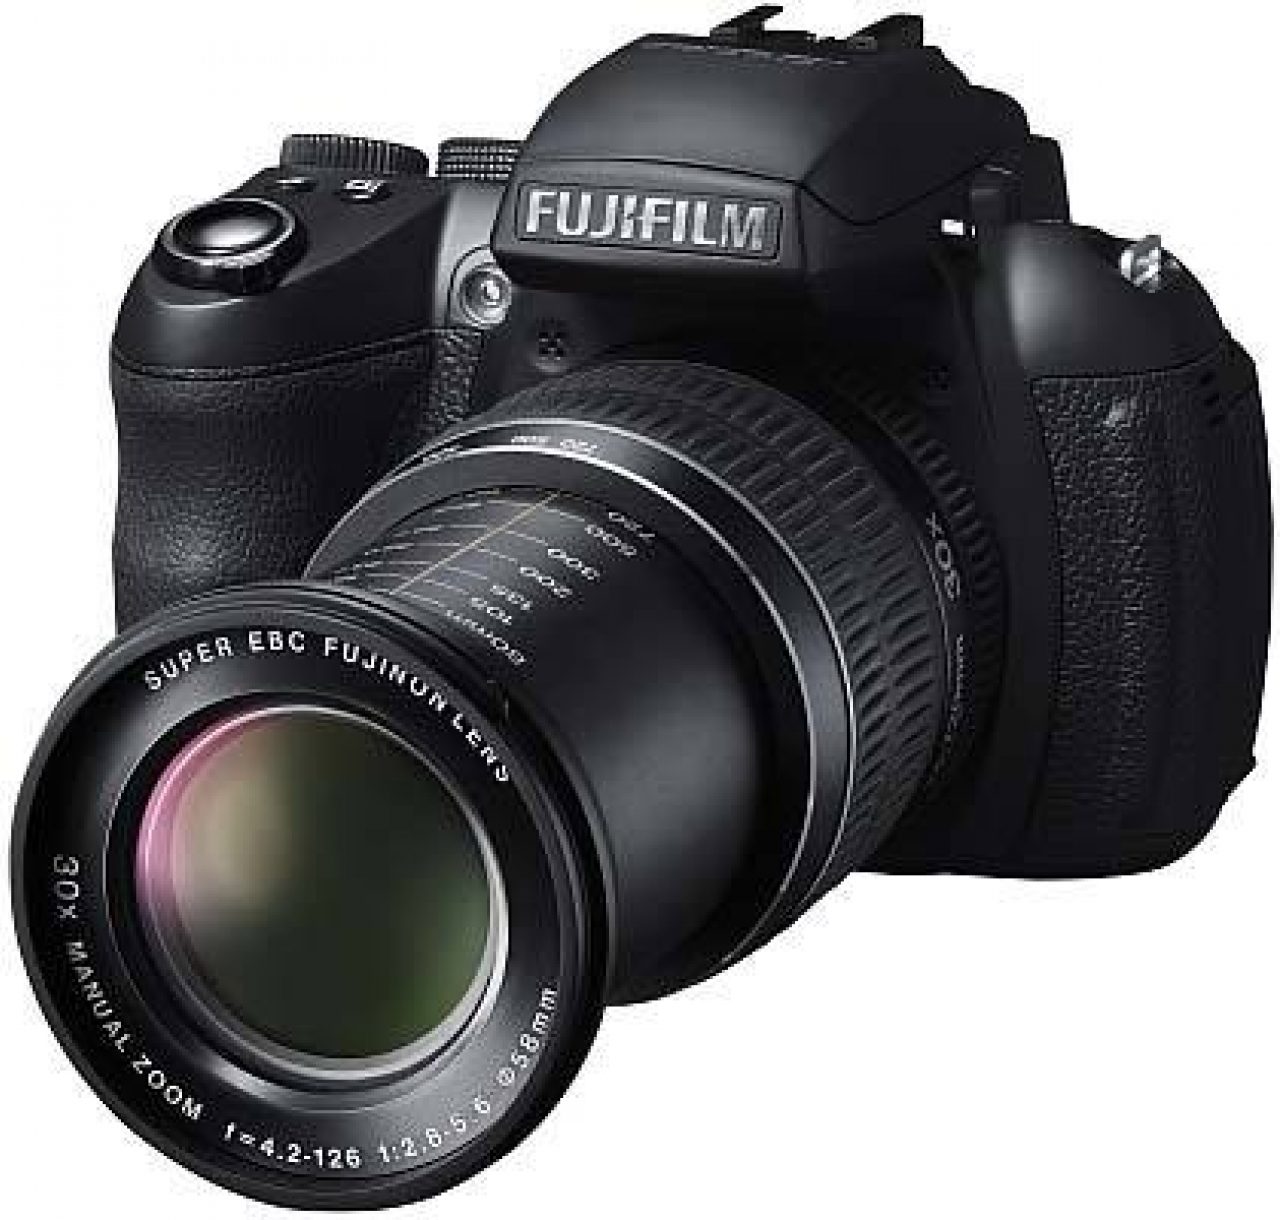 Fujifilm FinePix HS30EXR Review | Photography Blog